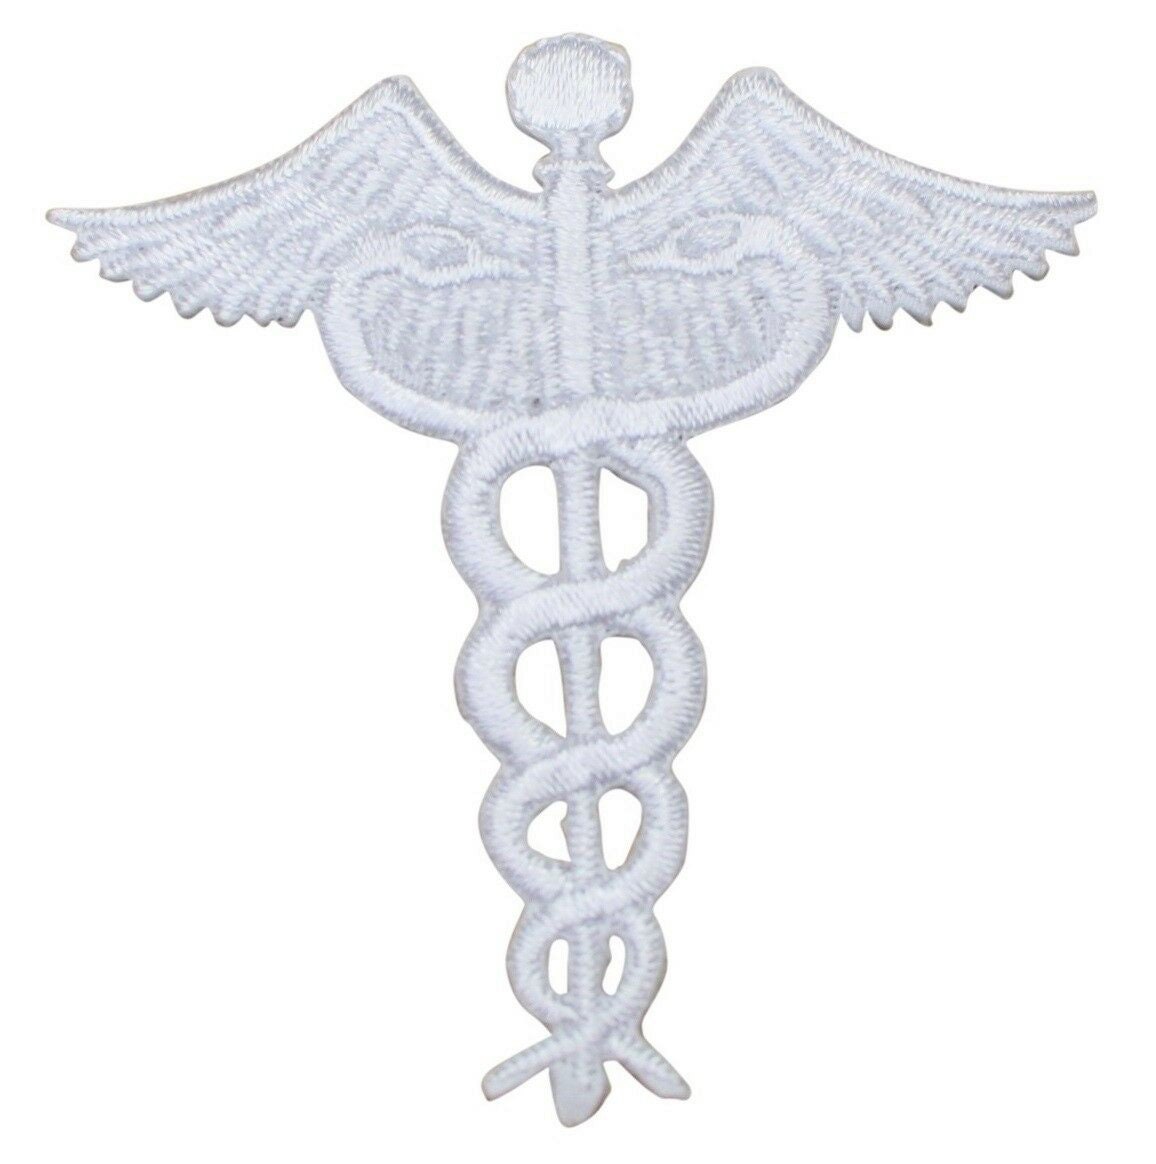 Caduceus Medical Symbol Black & White Patch, Medical Patches